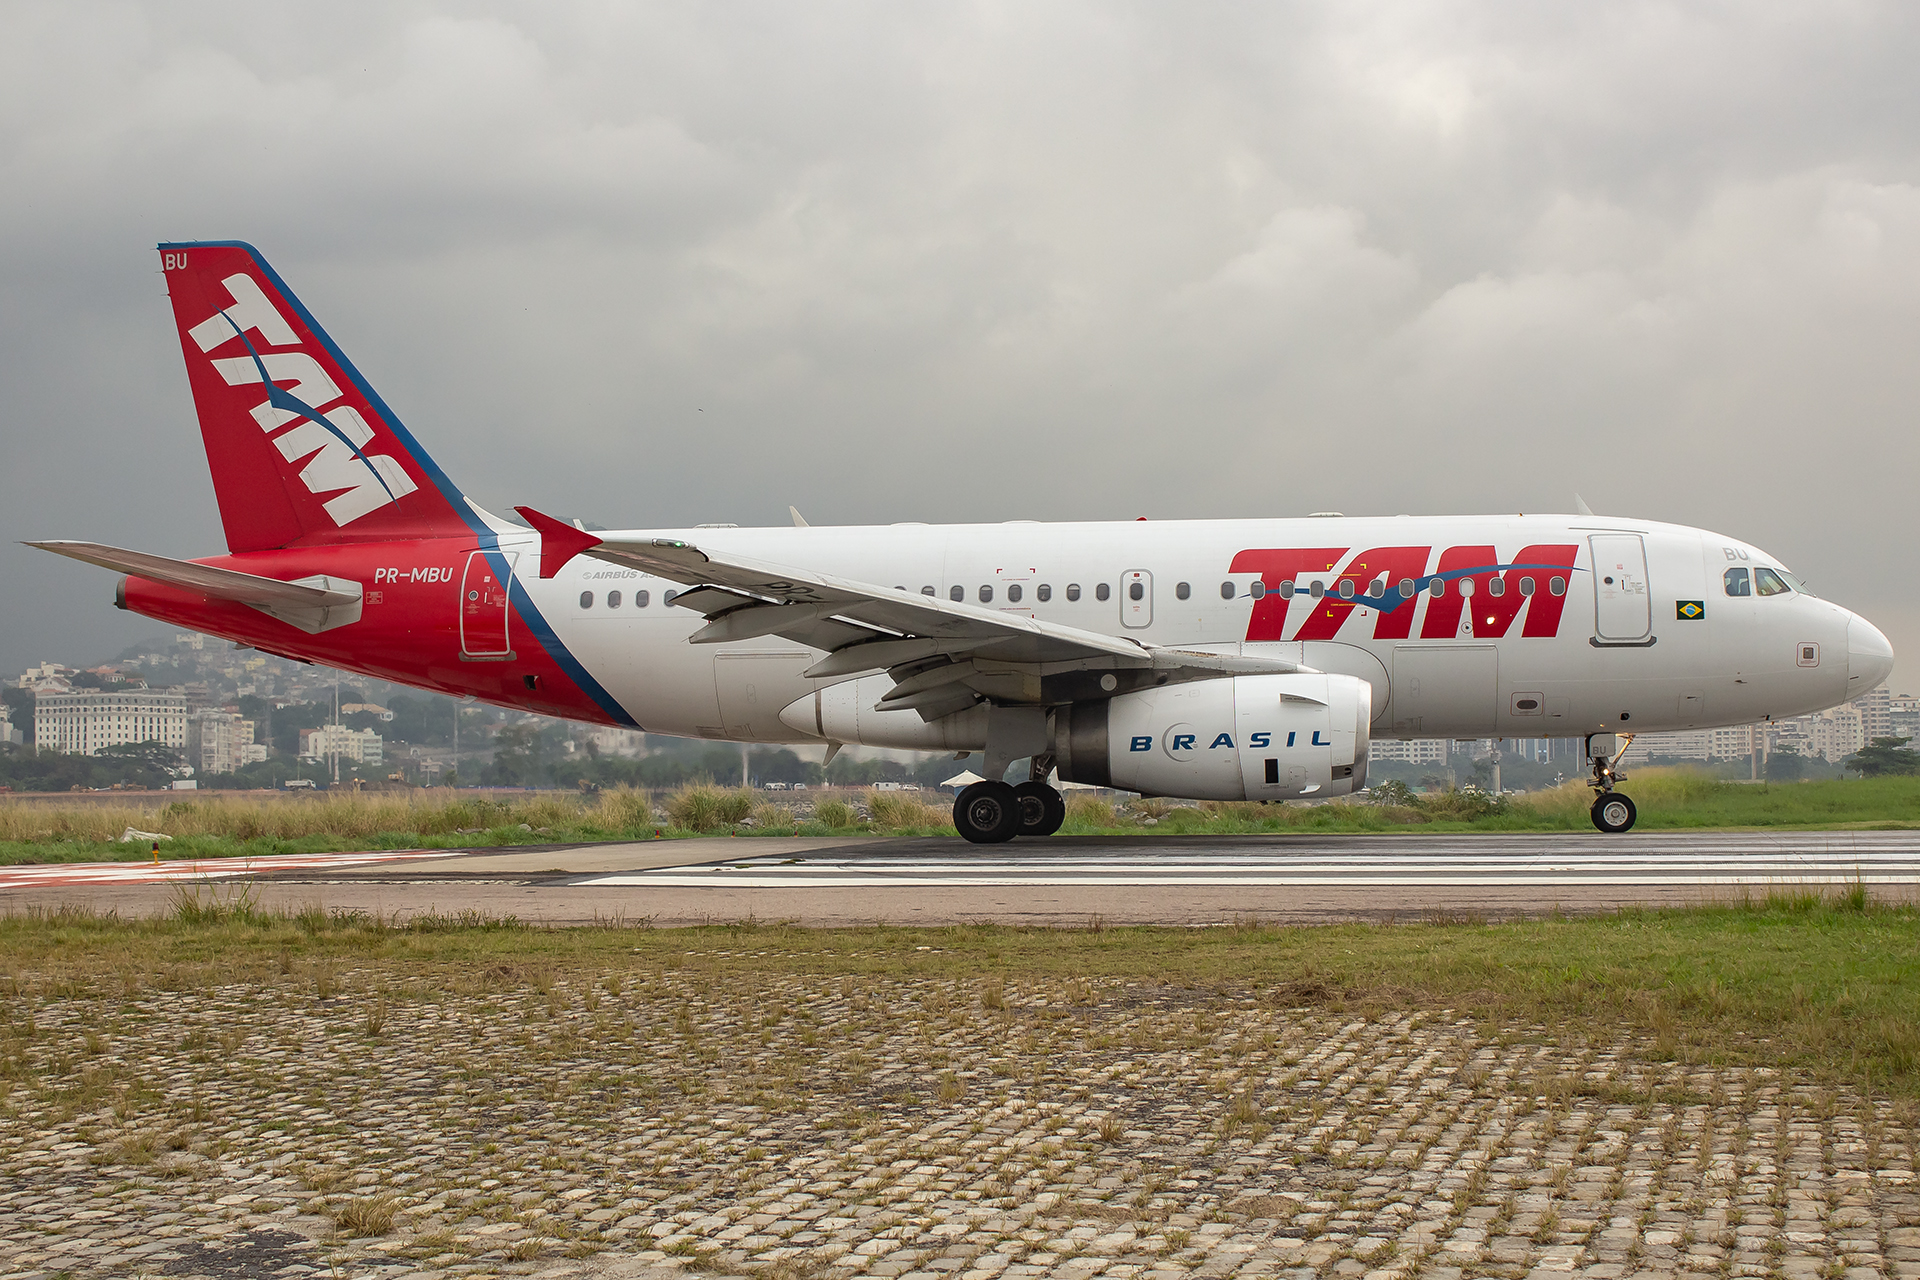 PR-MBU/PRMBU LATAM Airlines Brasil Airbus A319 Airframe Information - AVSpotters.com